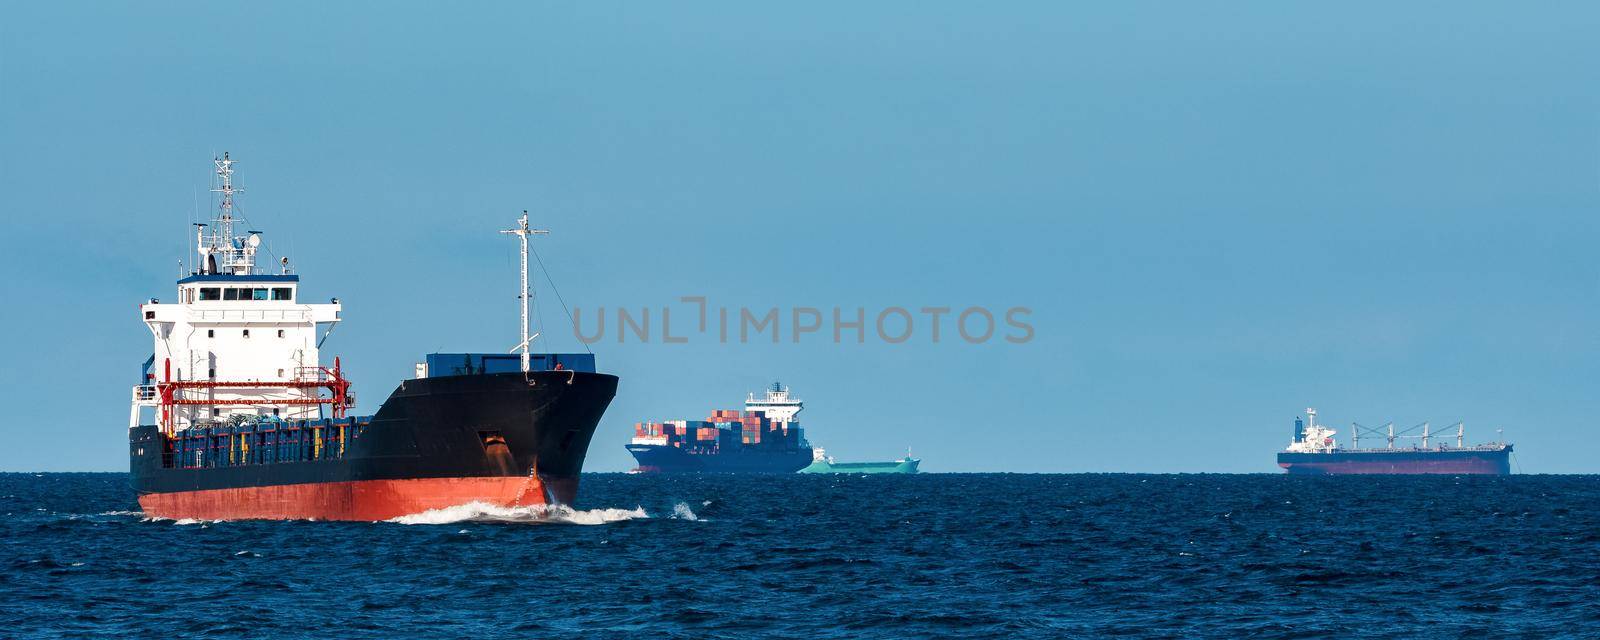 Black cargo ship by InfinitumProdux